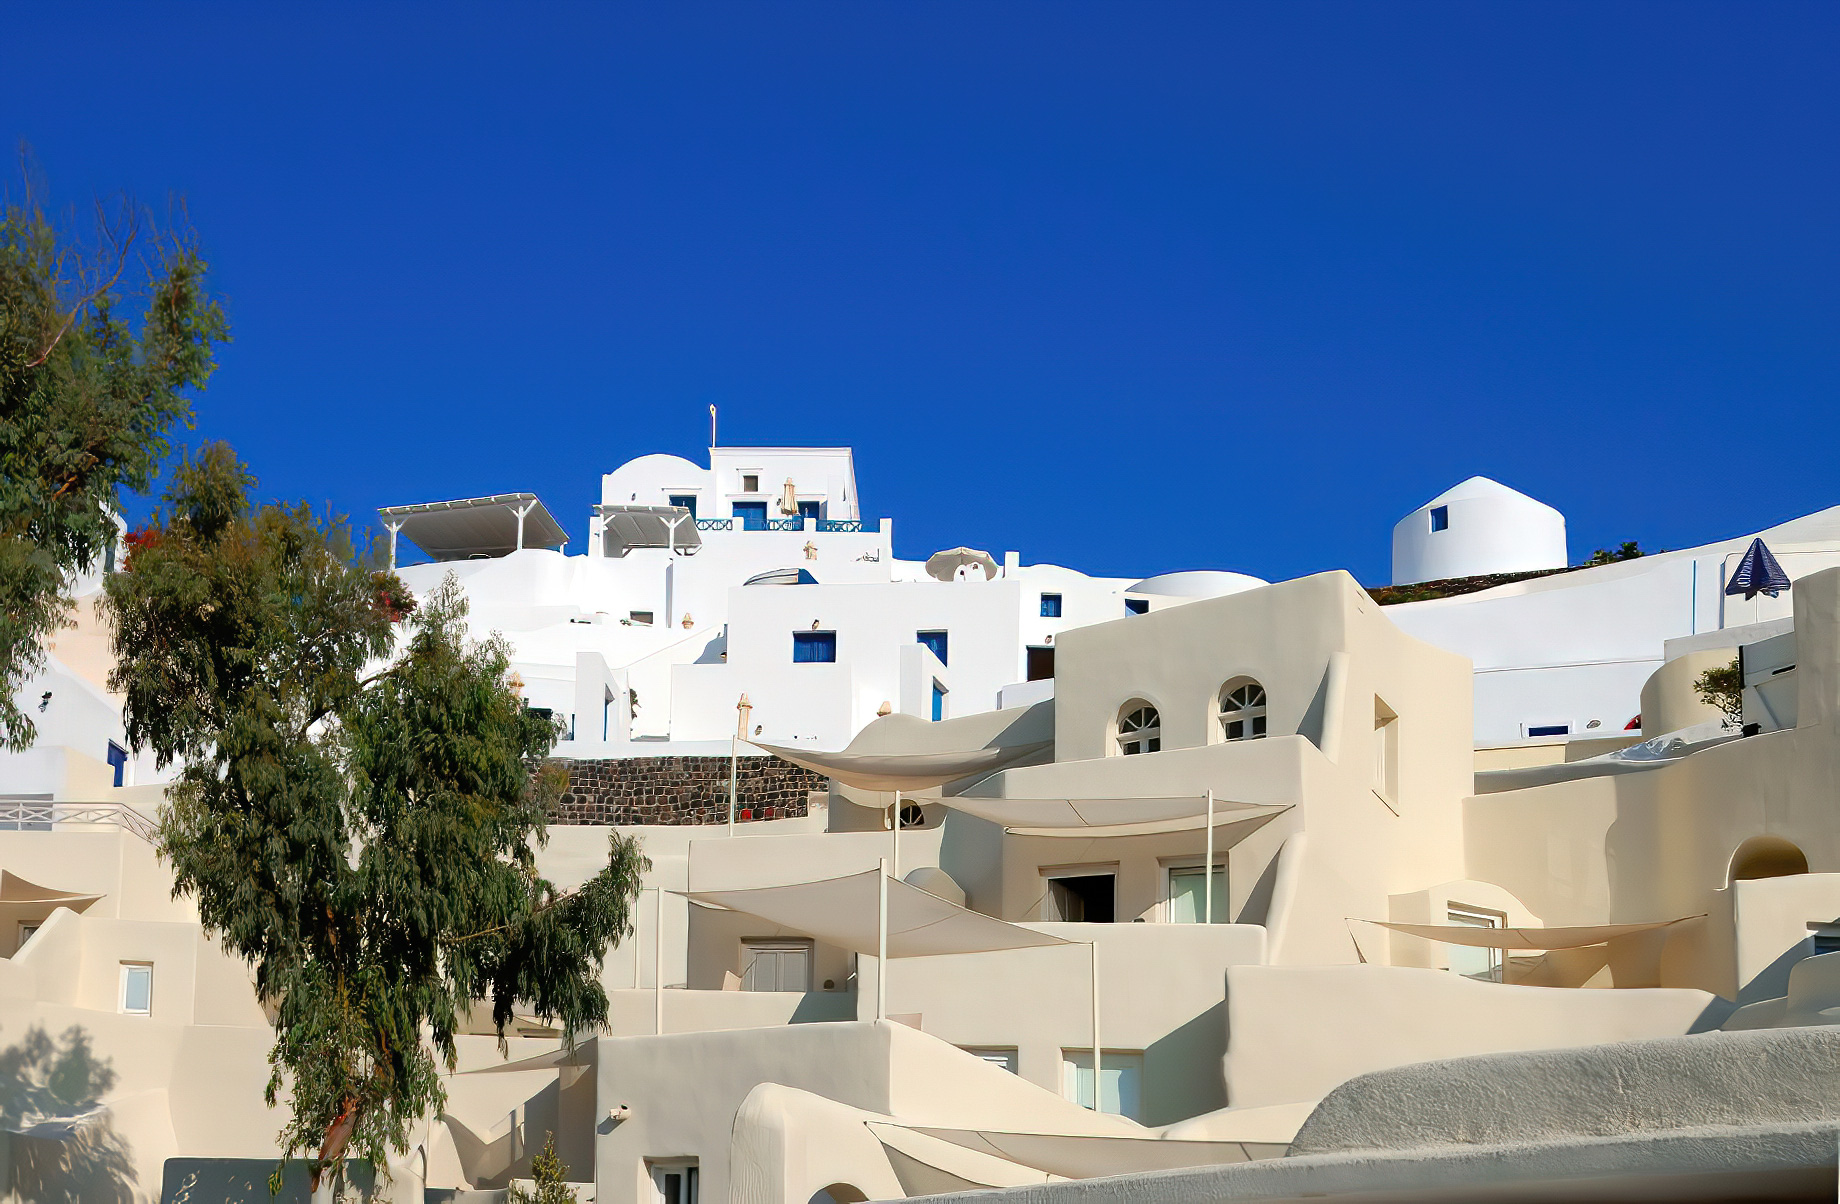 Mystique Hotel Santorini – Oia, Santorini Island, Greece – Cycladic Architecture Exterior